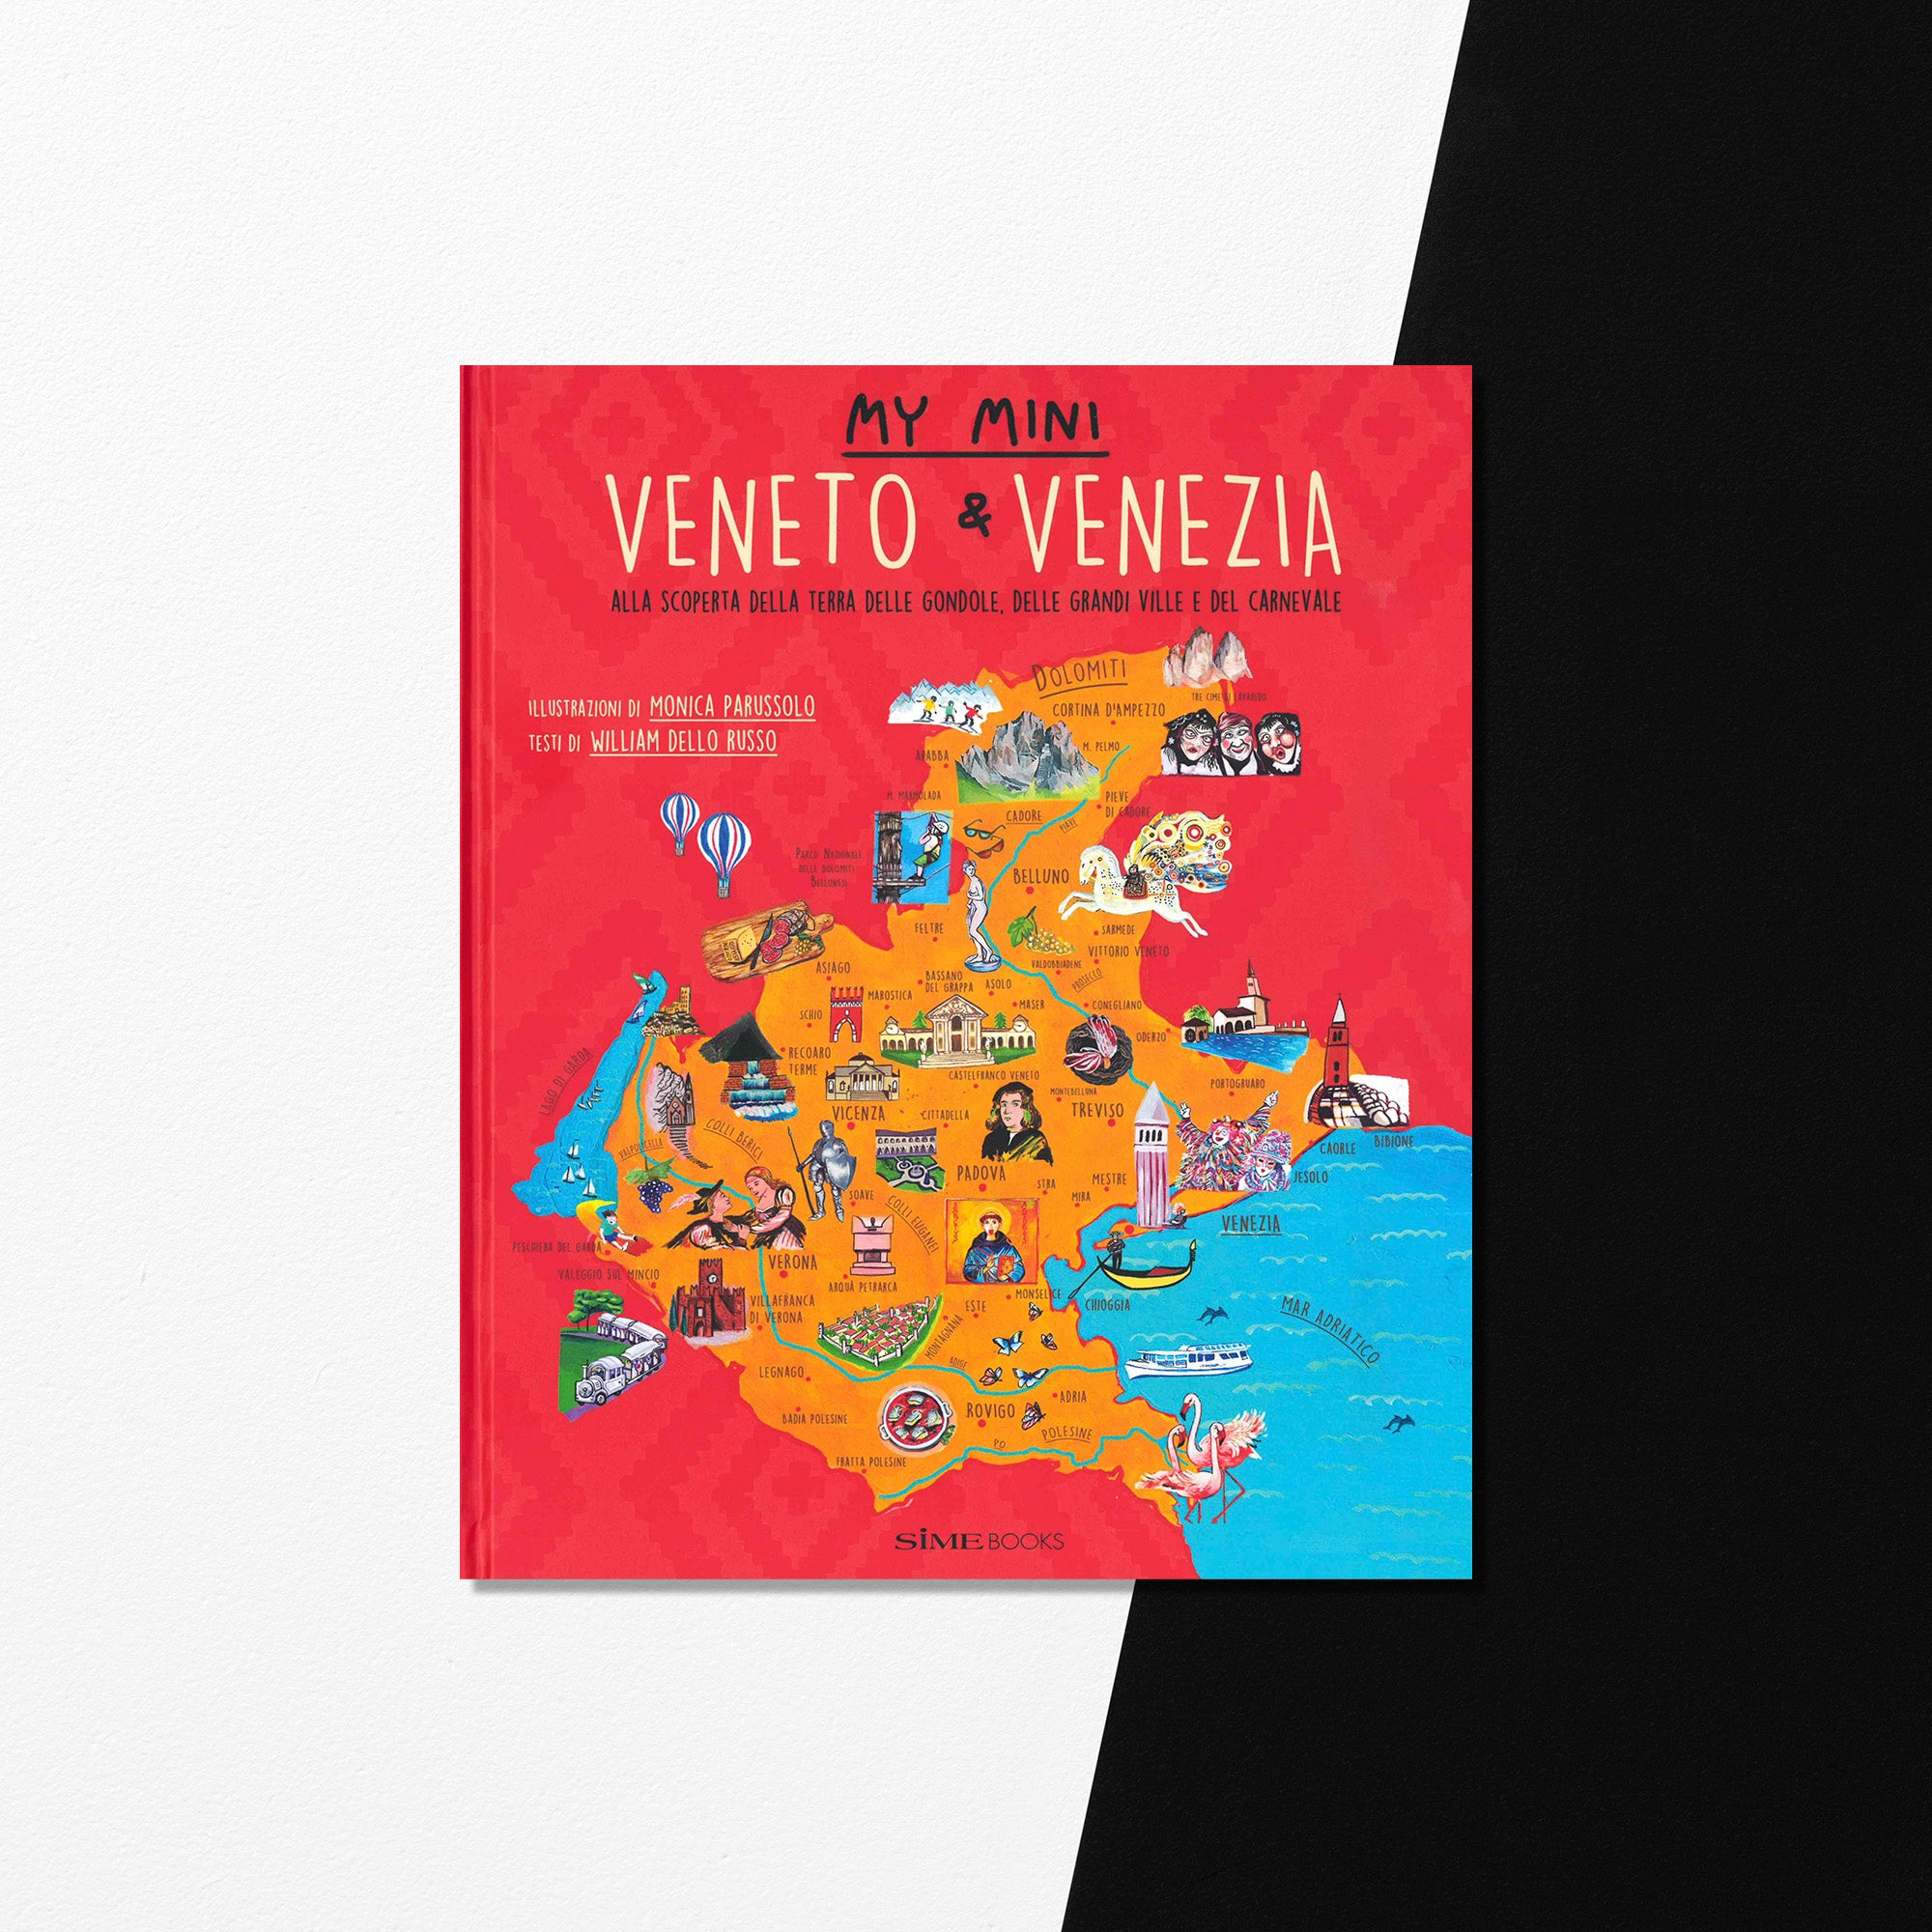 My Mini Veneto & Venezia / My Mini Veneto & Venice